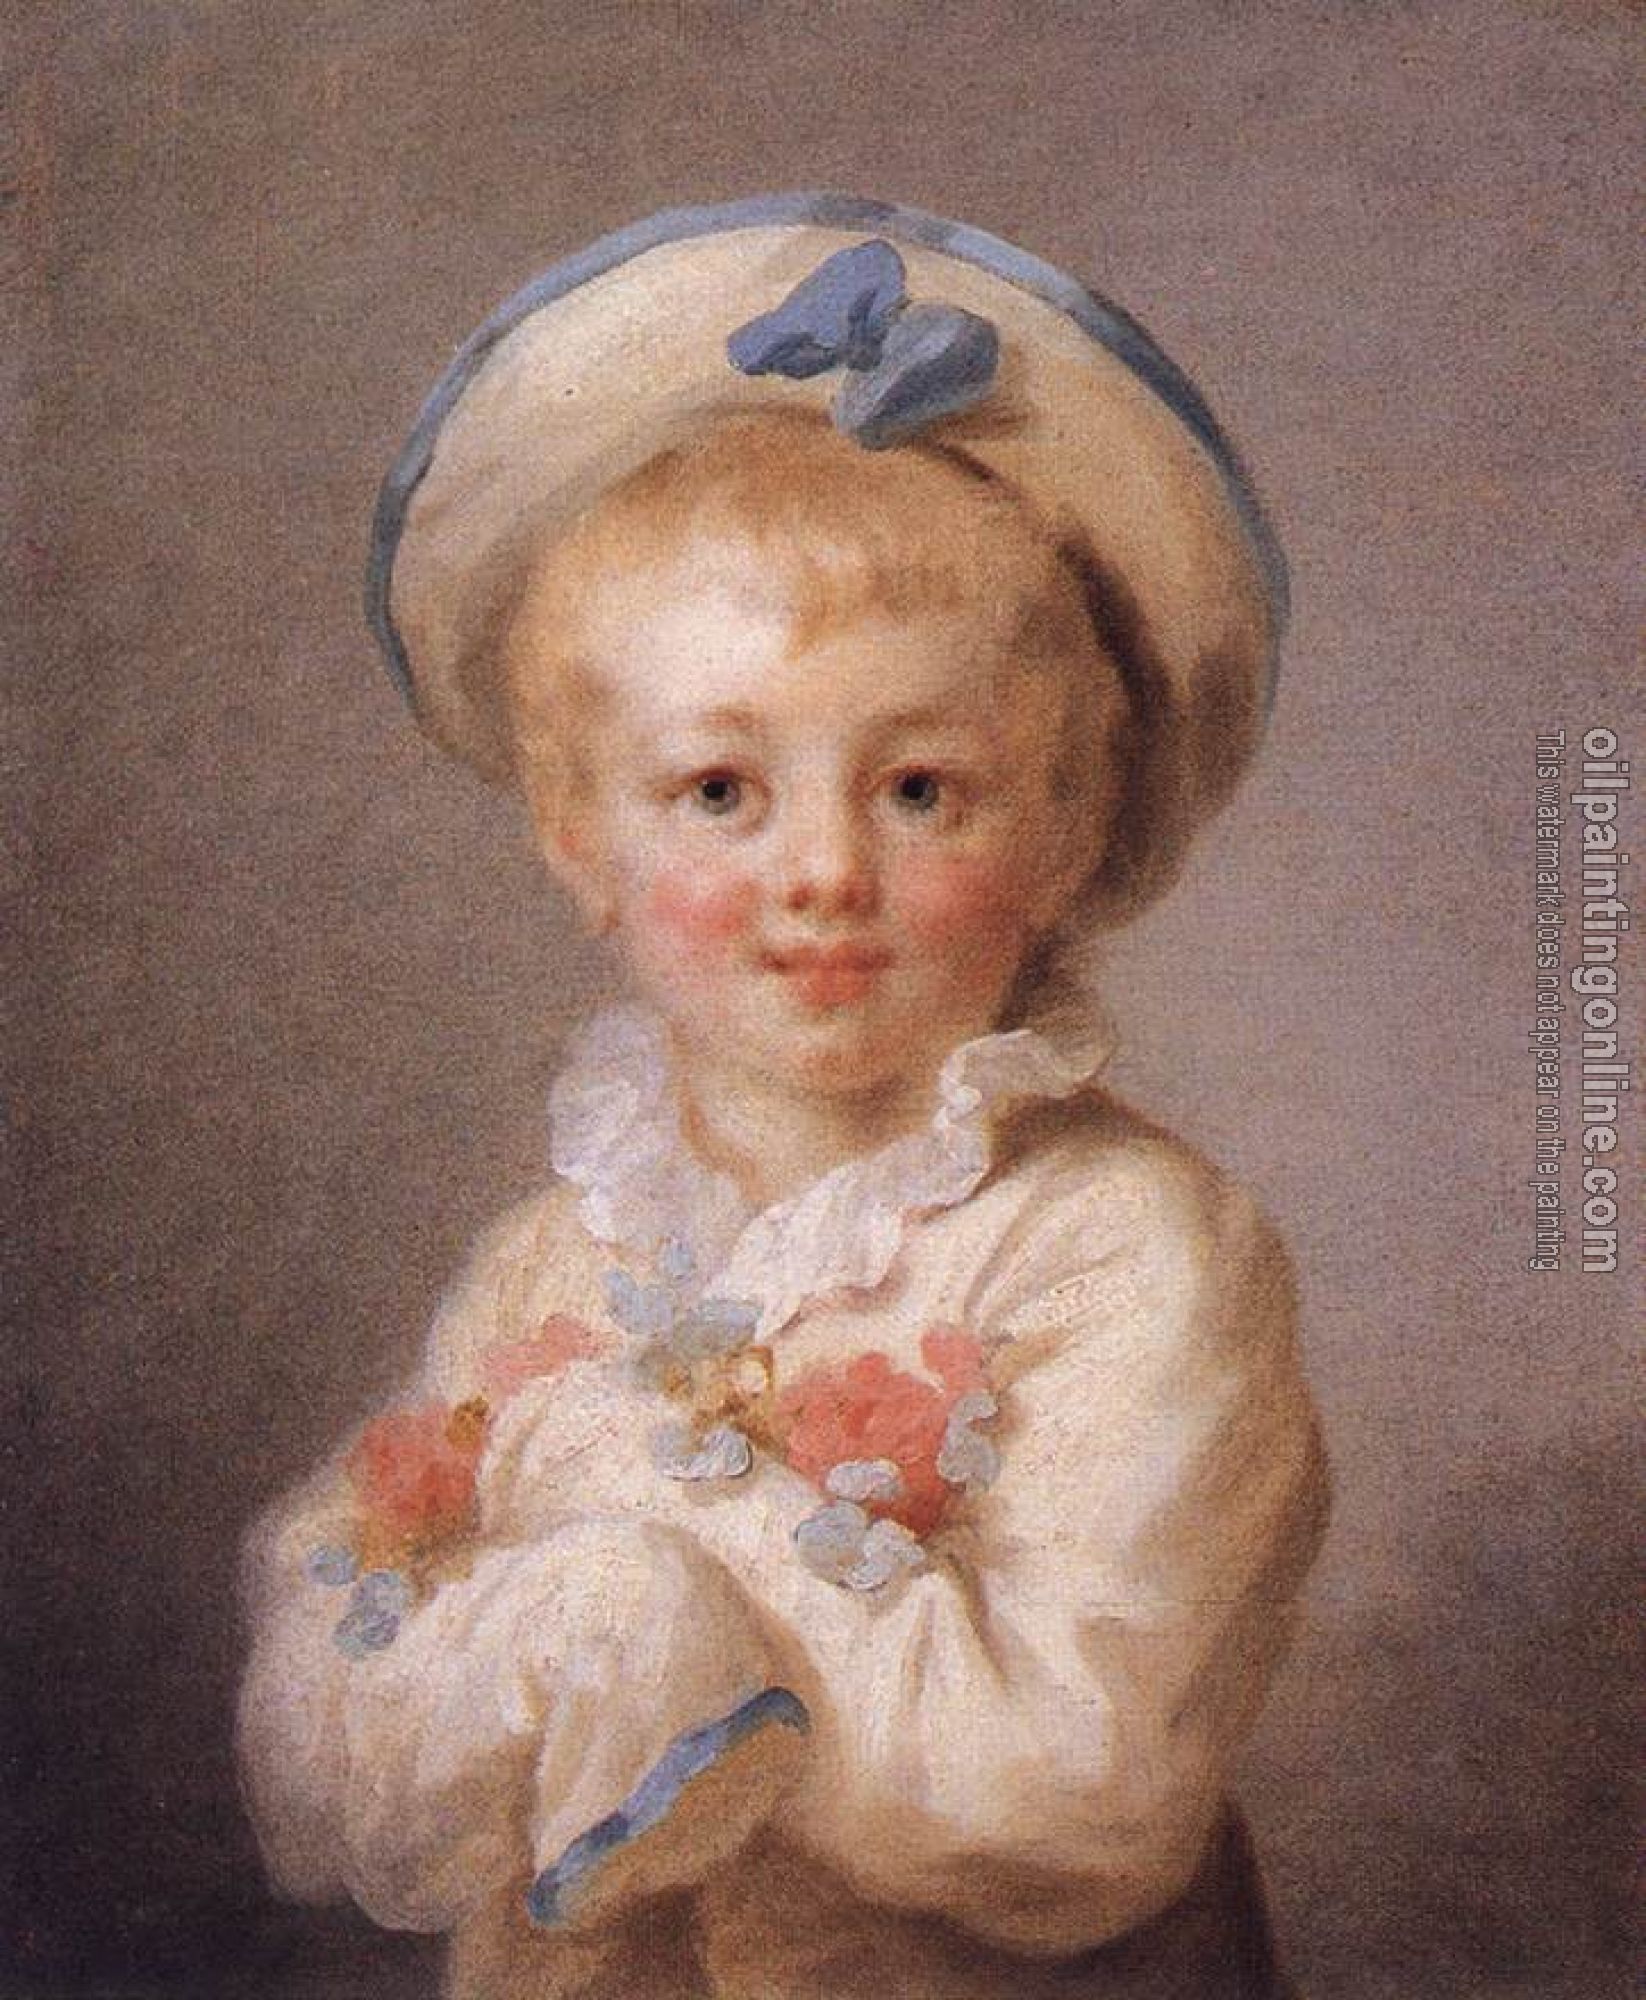 Fragonard, Jean-Honore - A Boy as Pierrot